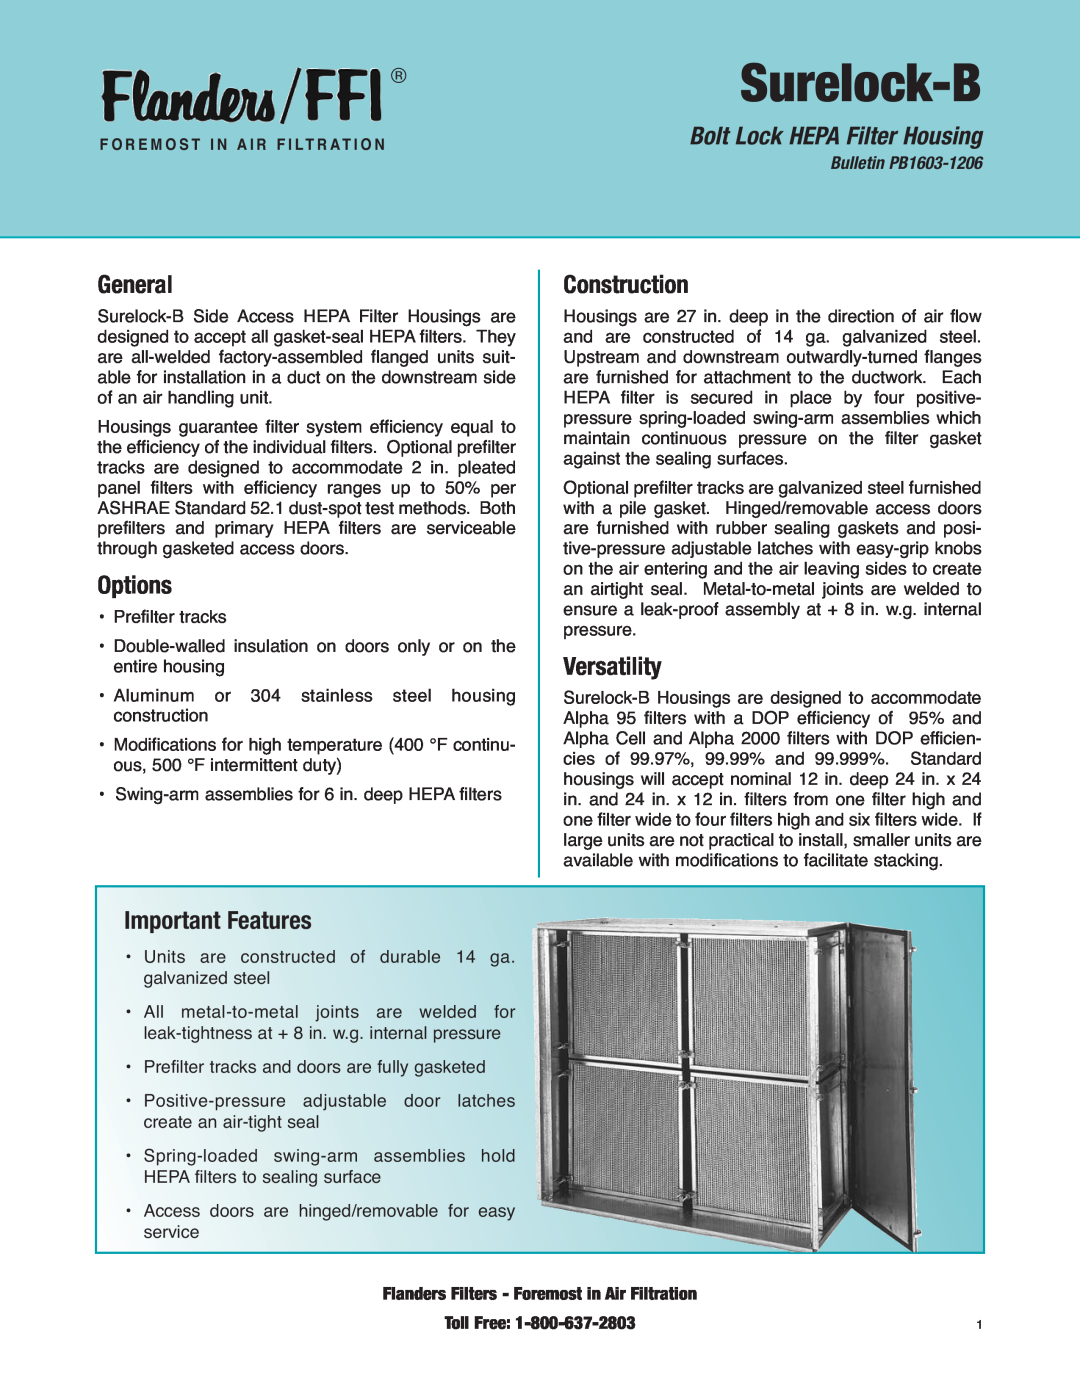 Precisionaire Surelock B manual General, Options, Construction, Versatility, Important Features, Bulletin PB1603-1206 